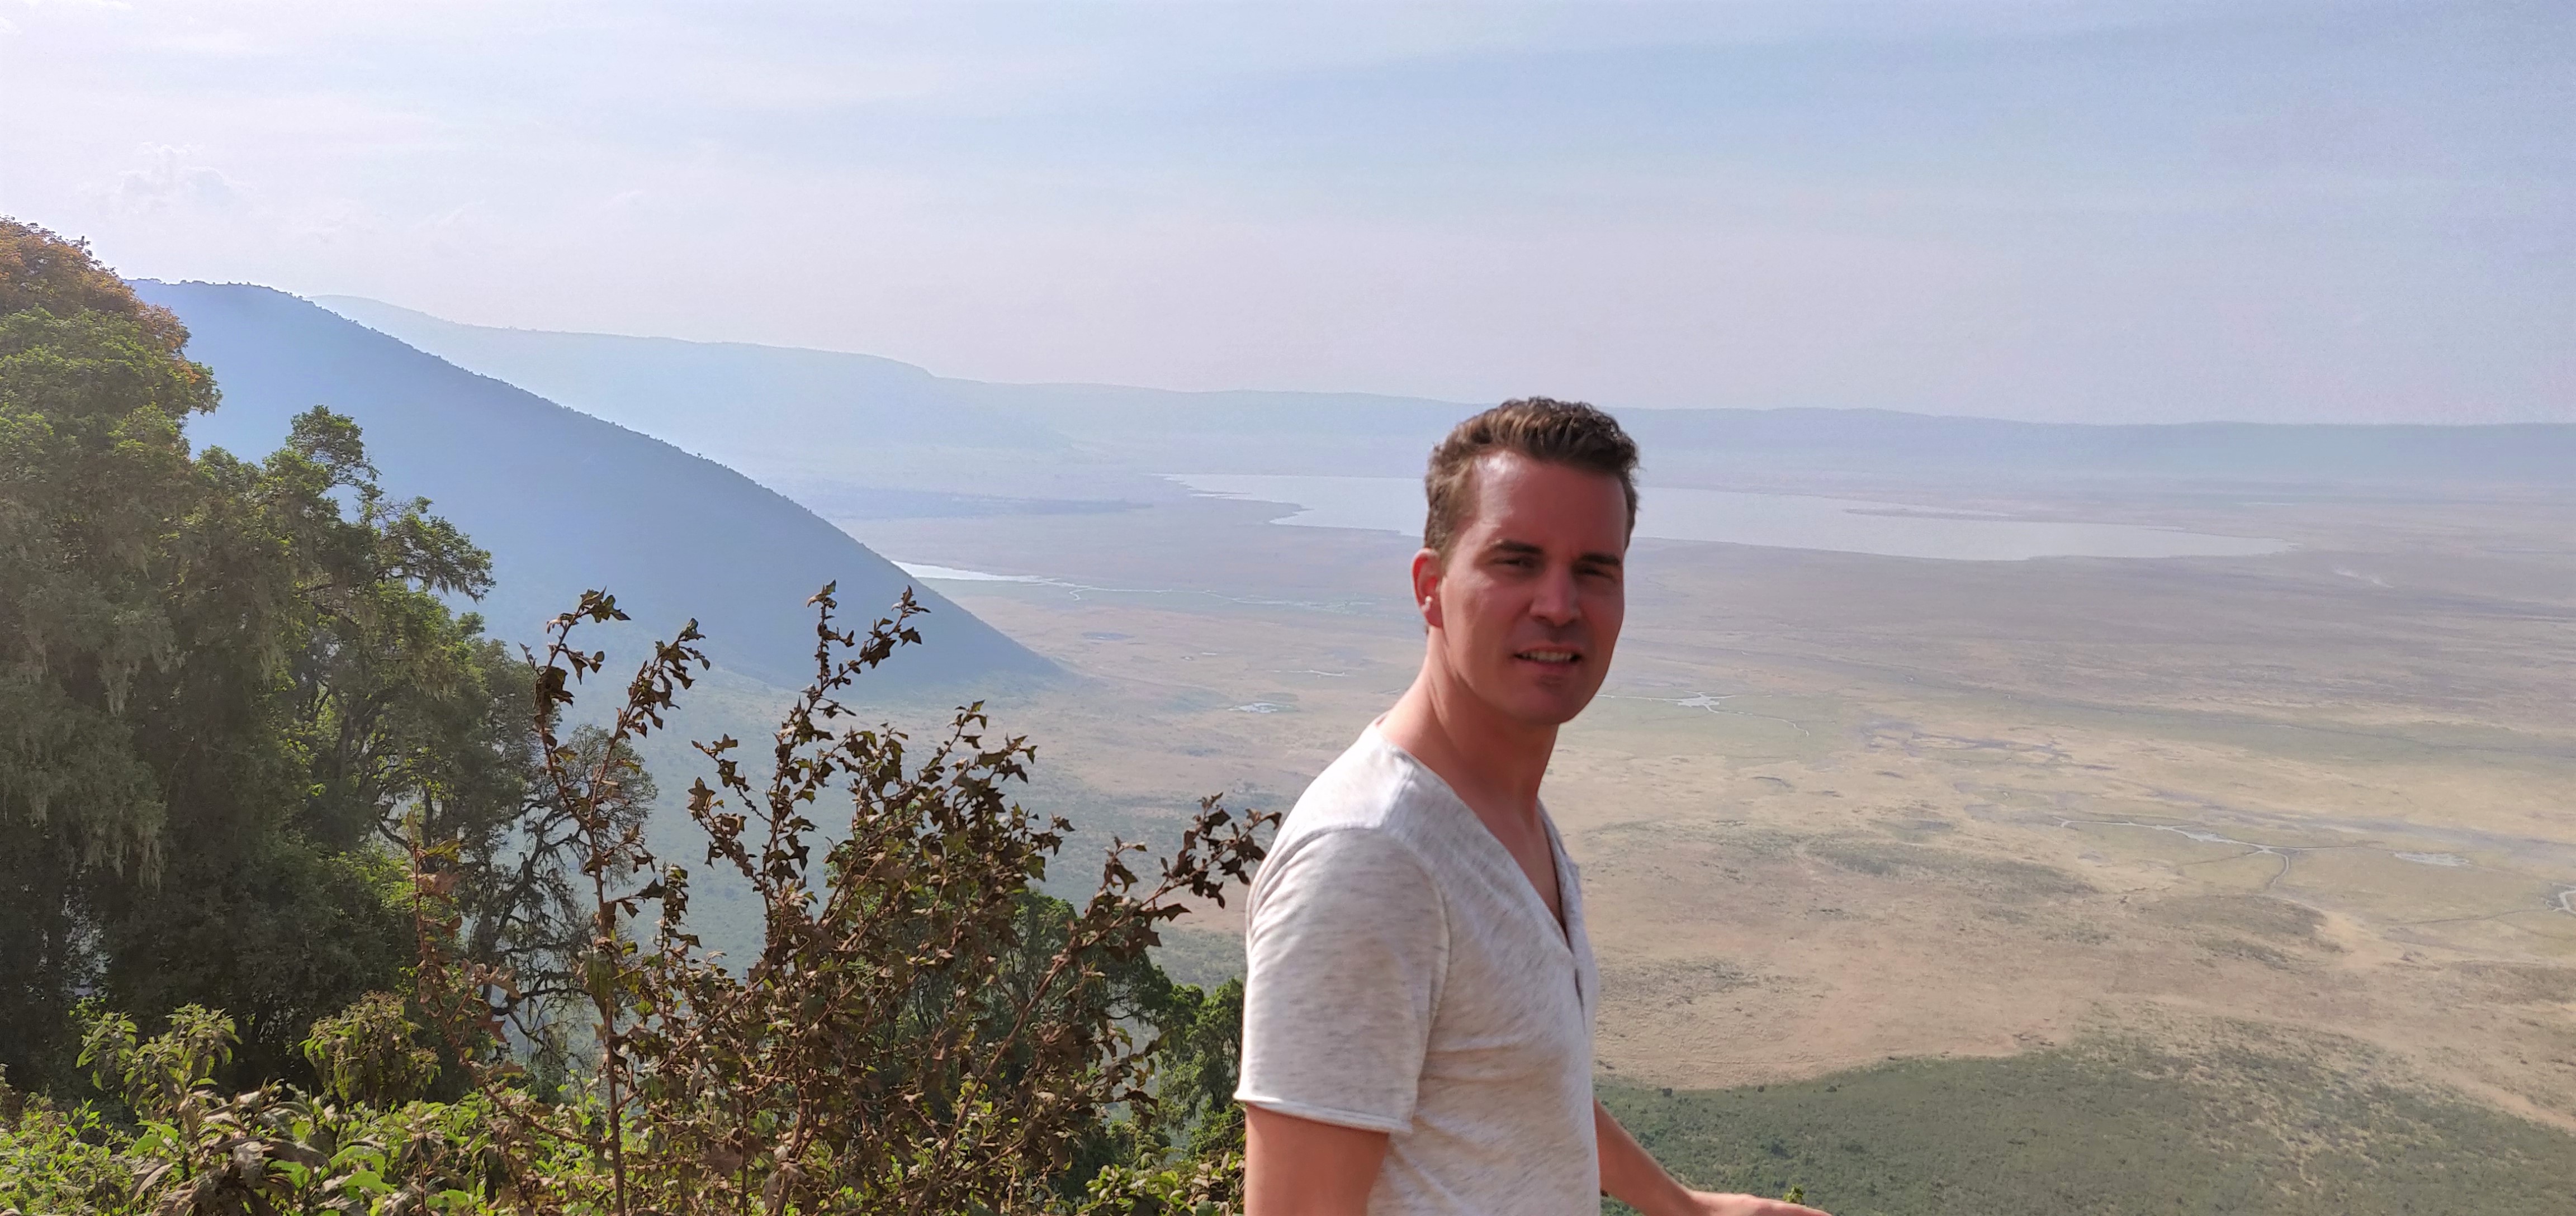 Ngorongoro viewing point